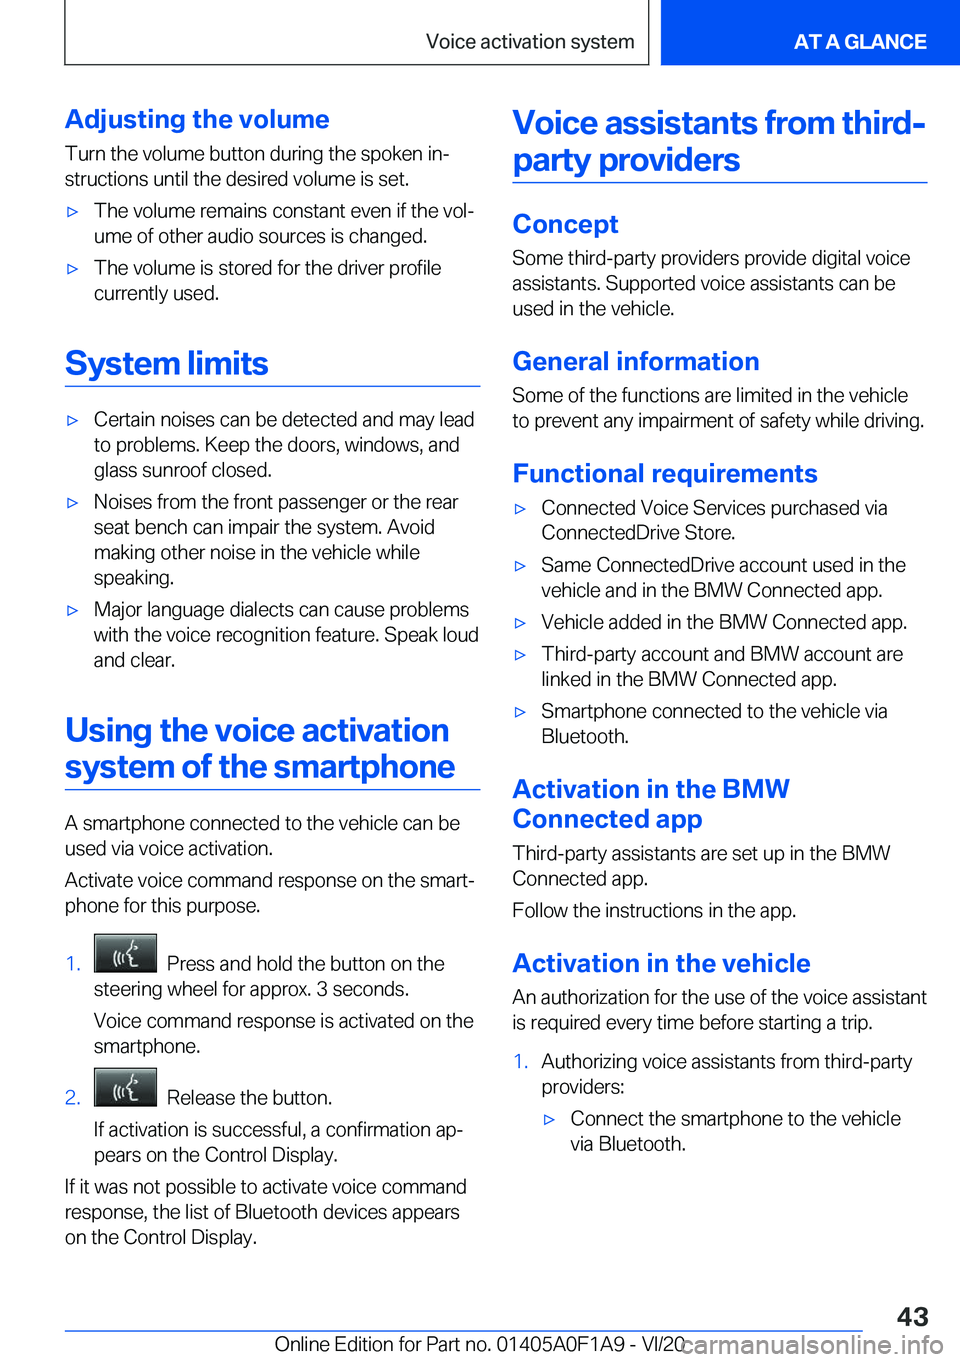 BMW 2 SERIES COUPE 2021 Service Manual �A�d�j�u�s�t�i�n�g��t�h�e��v�o�l�u�m�e
�T�u�r�n��t�h�e��v�o�l�u�m�e��b�u�t�t�o�n��d�u�r�i�n�g��t�h�e��s�p�o�k�e�n��i�n#j
�s�t�r�u�c�t�i�o�n�s��u�n�t�i�l��t�h�e��d�e�s�i�r�e�d��v�o�l�u�m�e